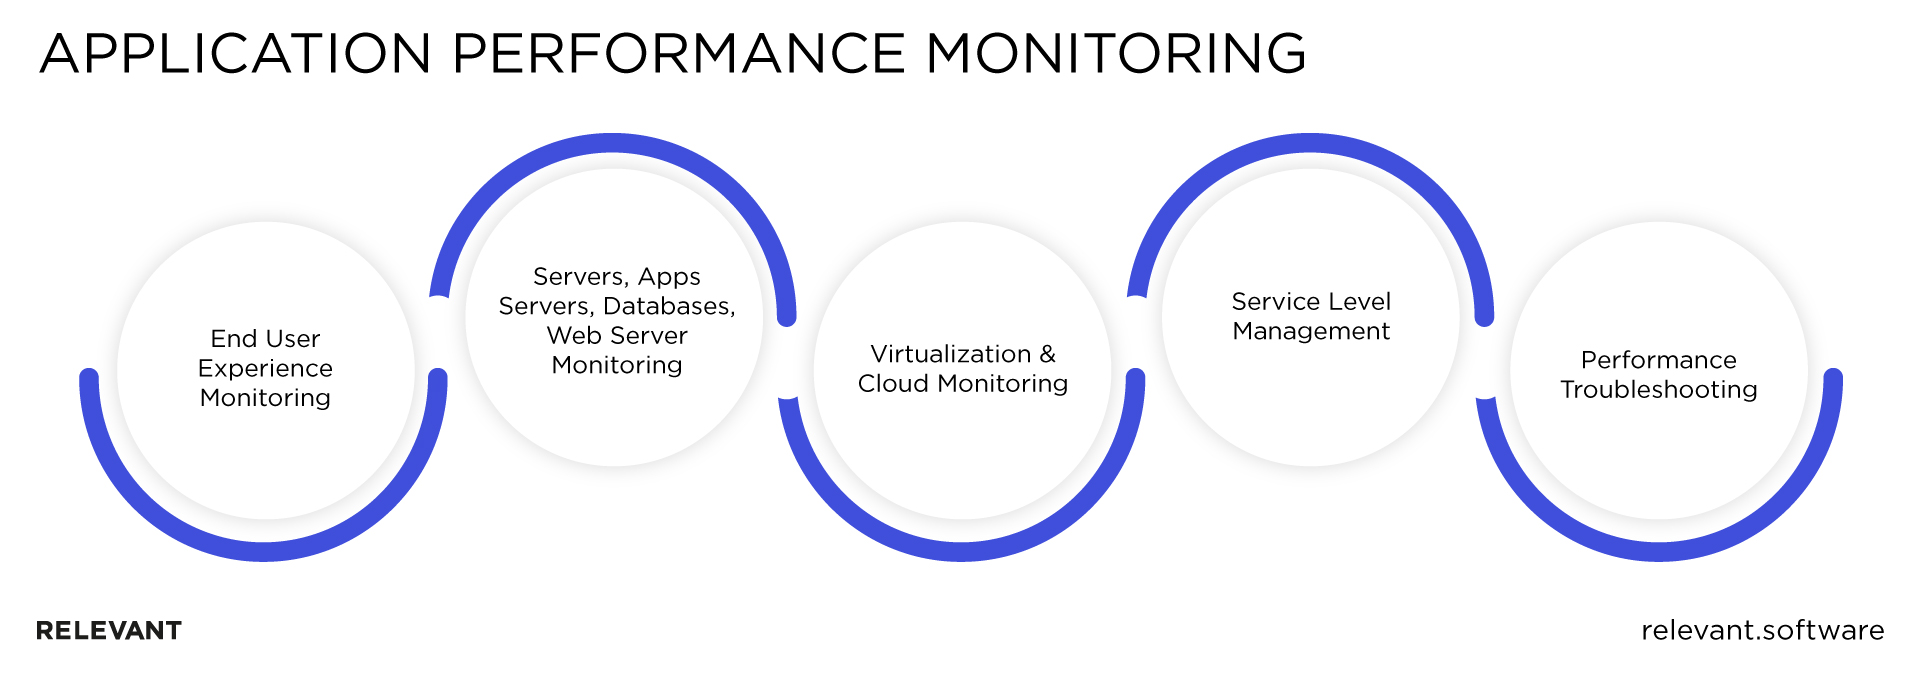 Application performance monitoring process